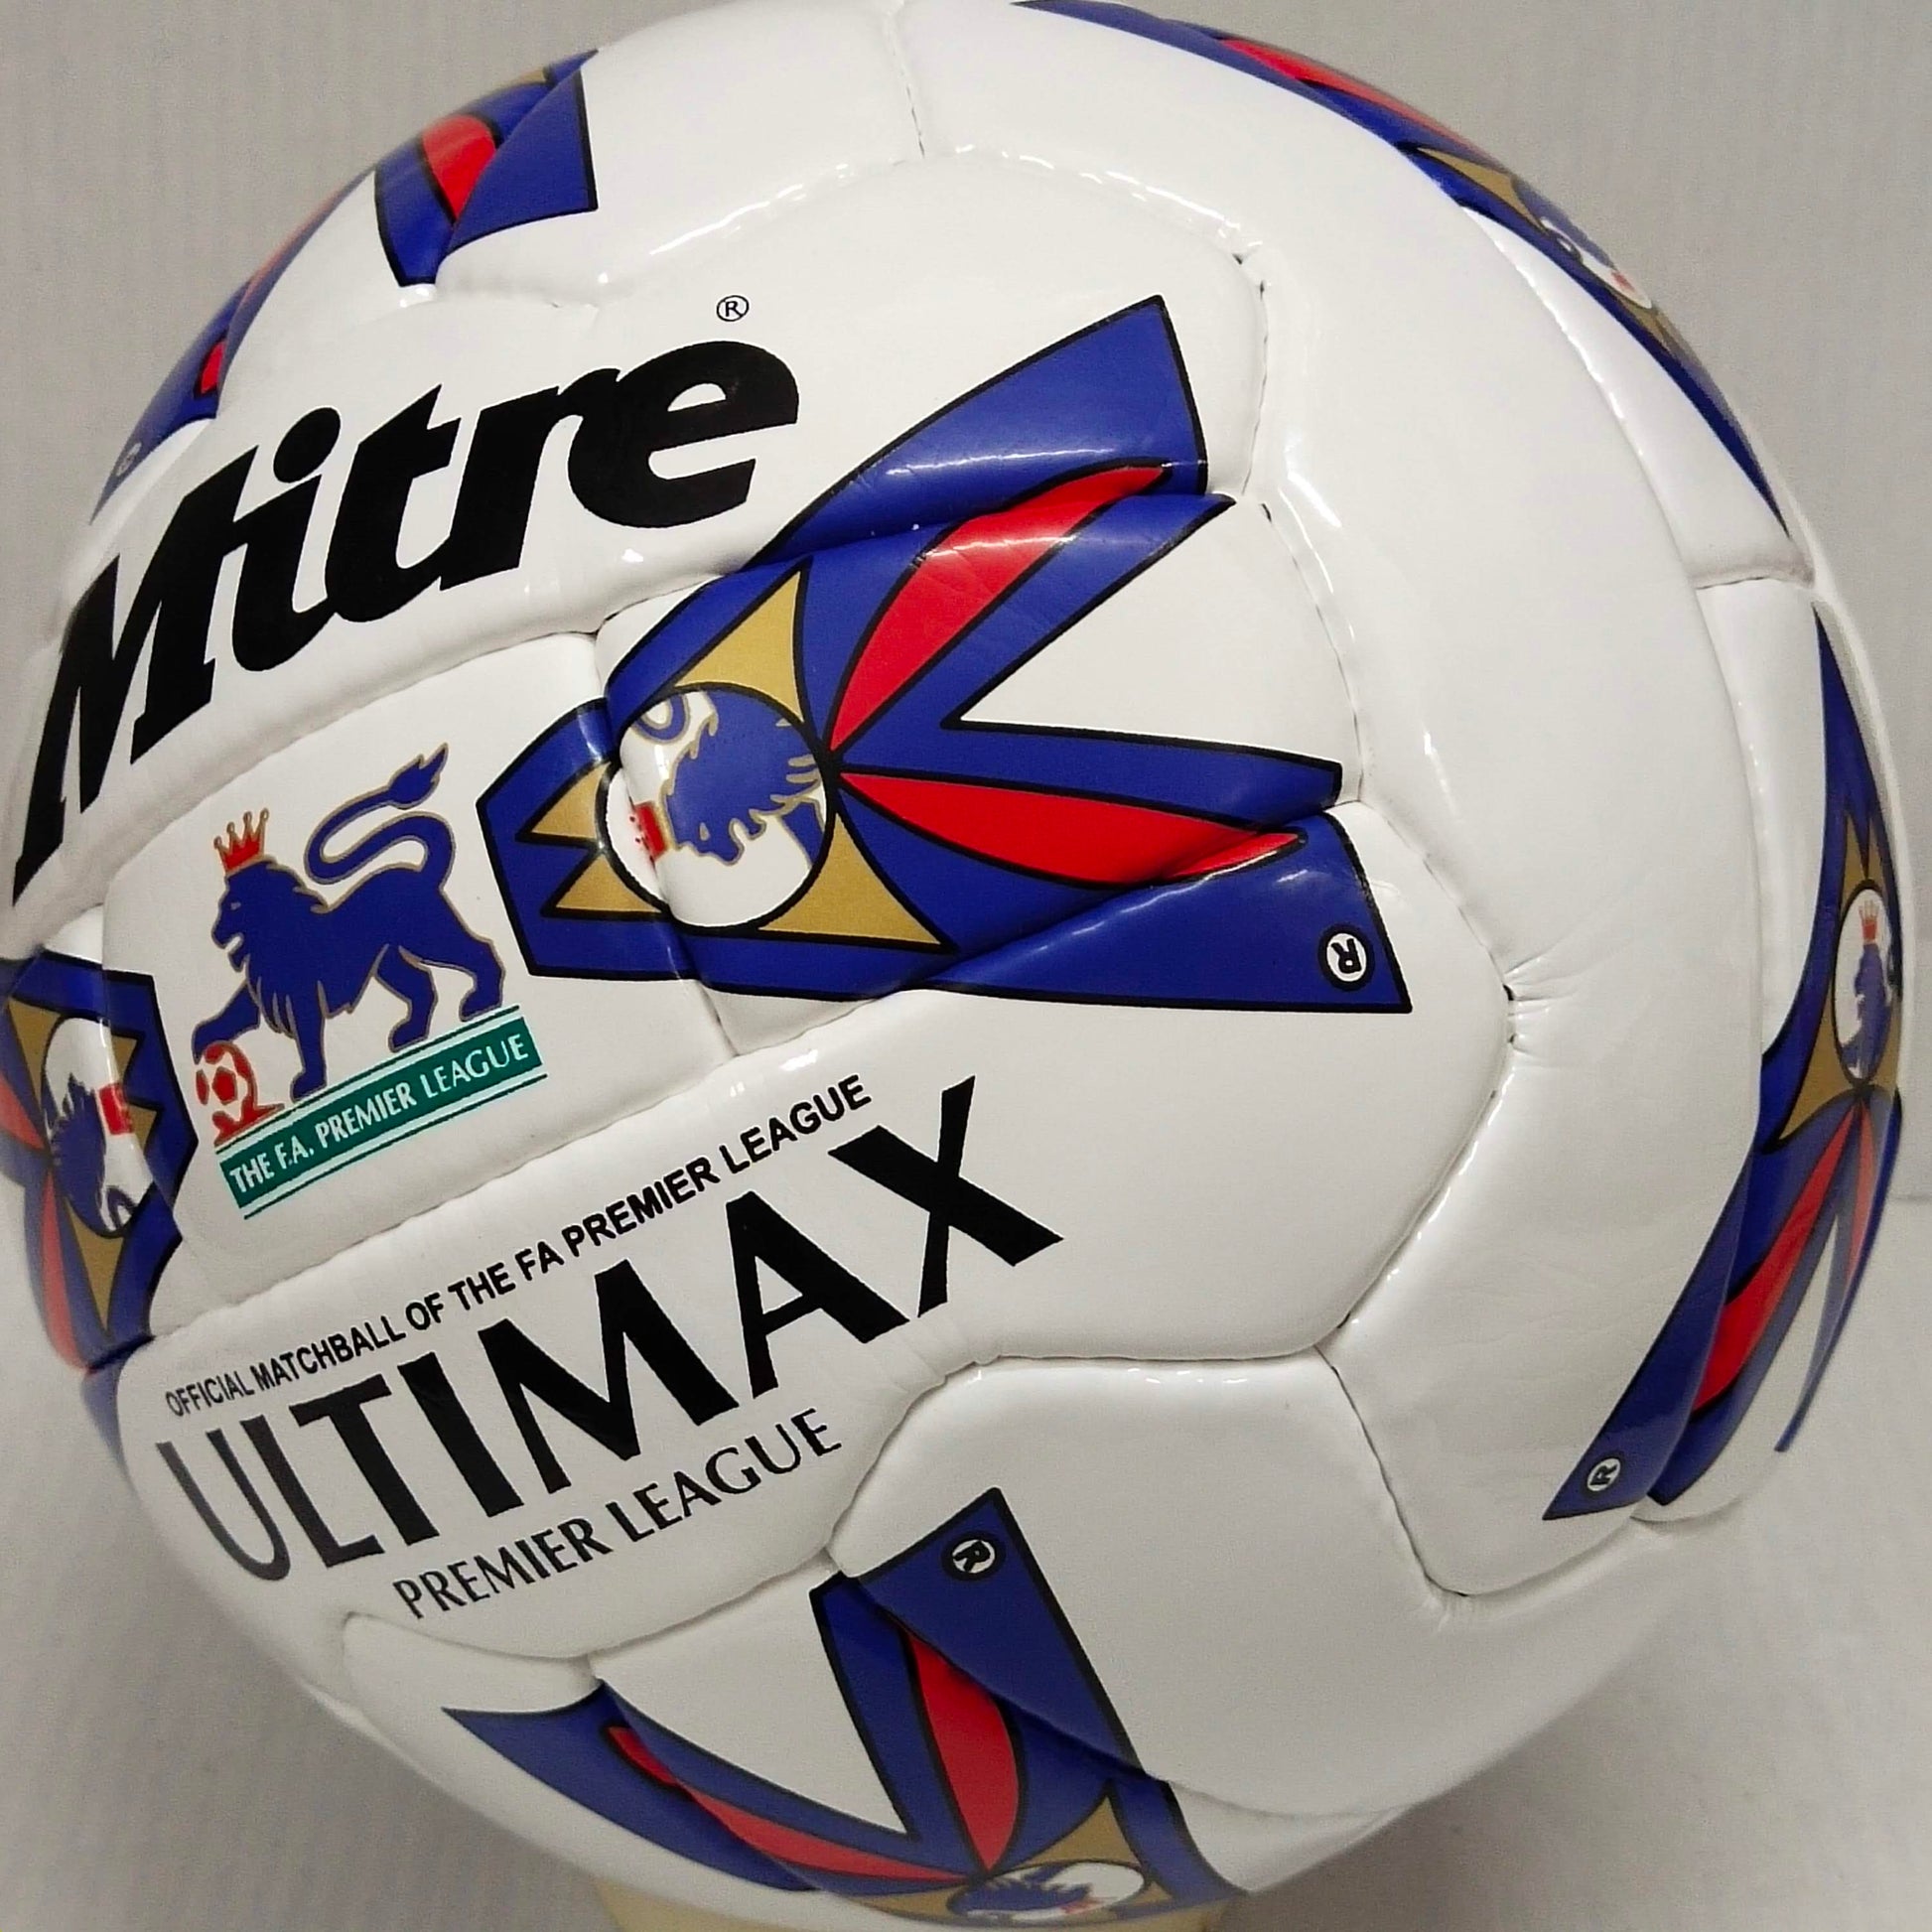 Mitre Ultimax | 1995 | The FA Premier League | Size 5 06